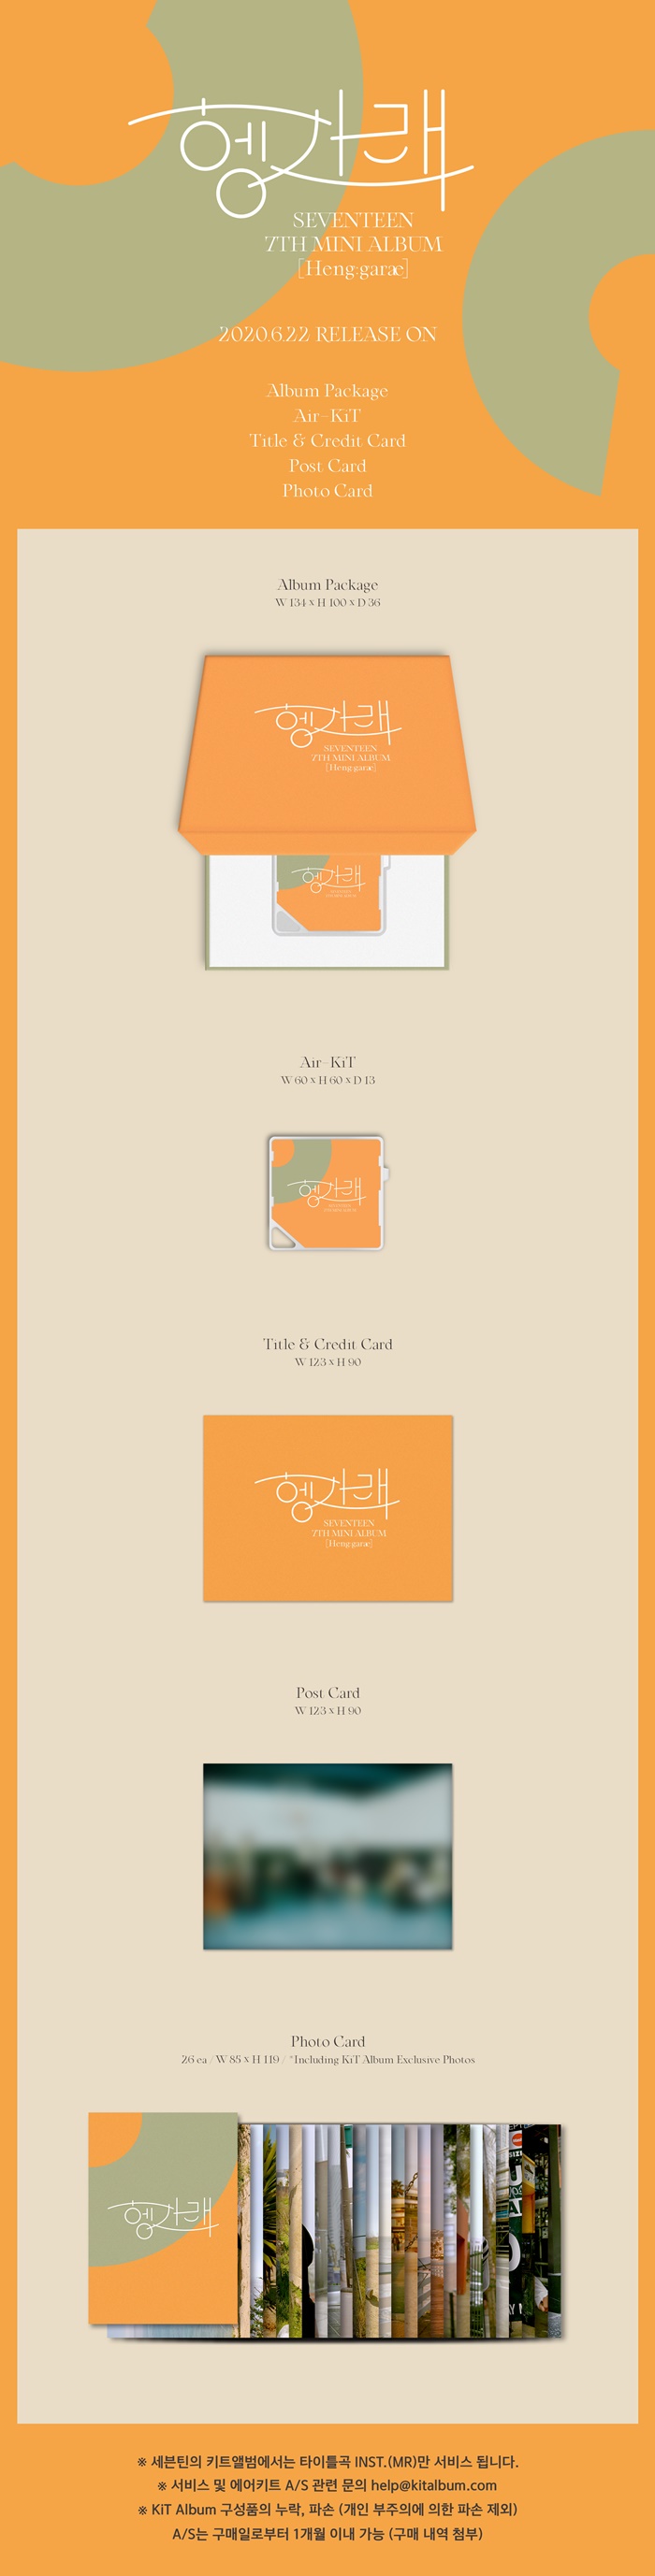 Pre-Order] [KiT] SEVENTEEN 7th Mini KiT Album - Heng:garae AIR KiT – Choice Music LA